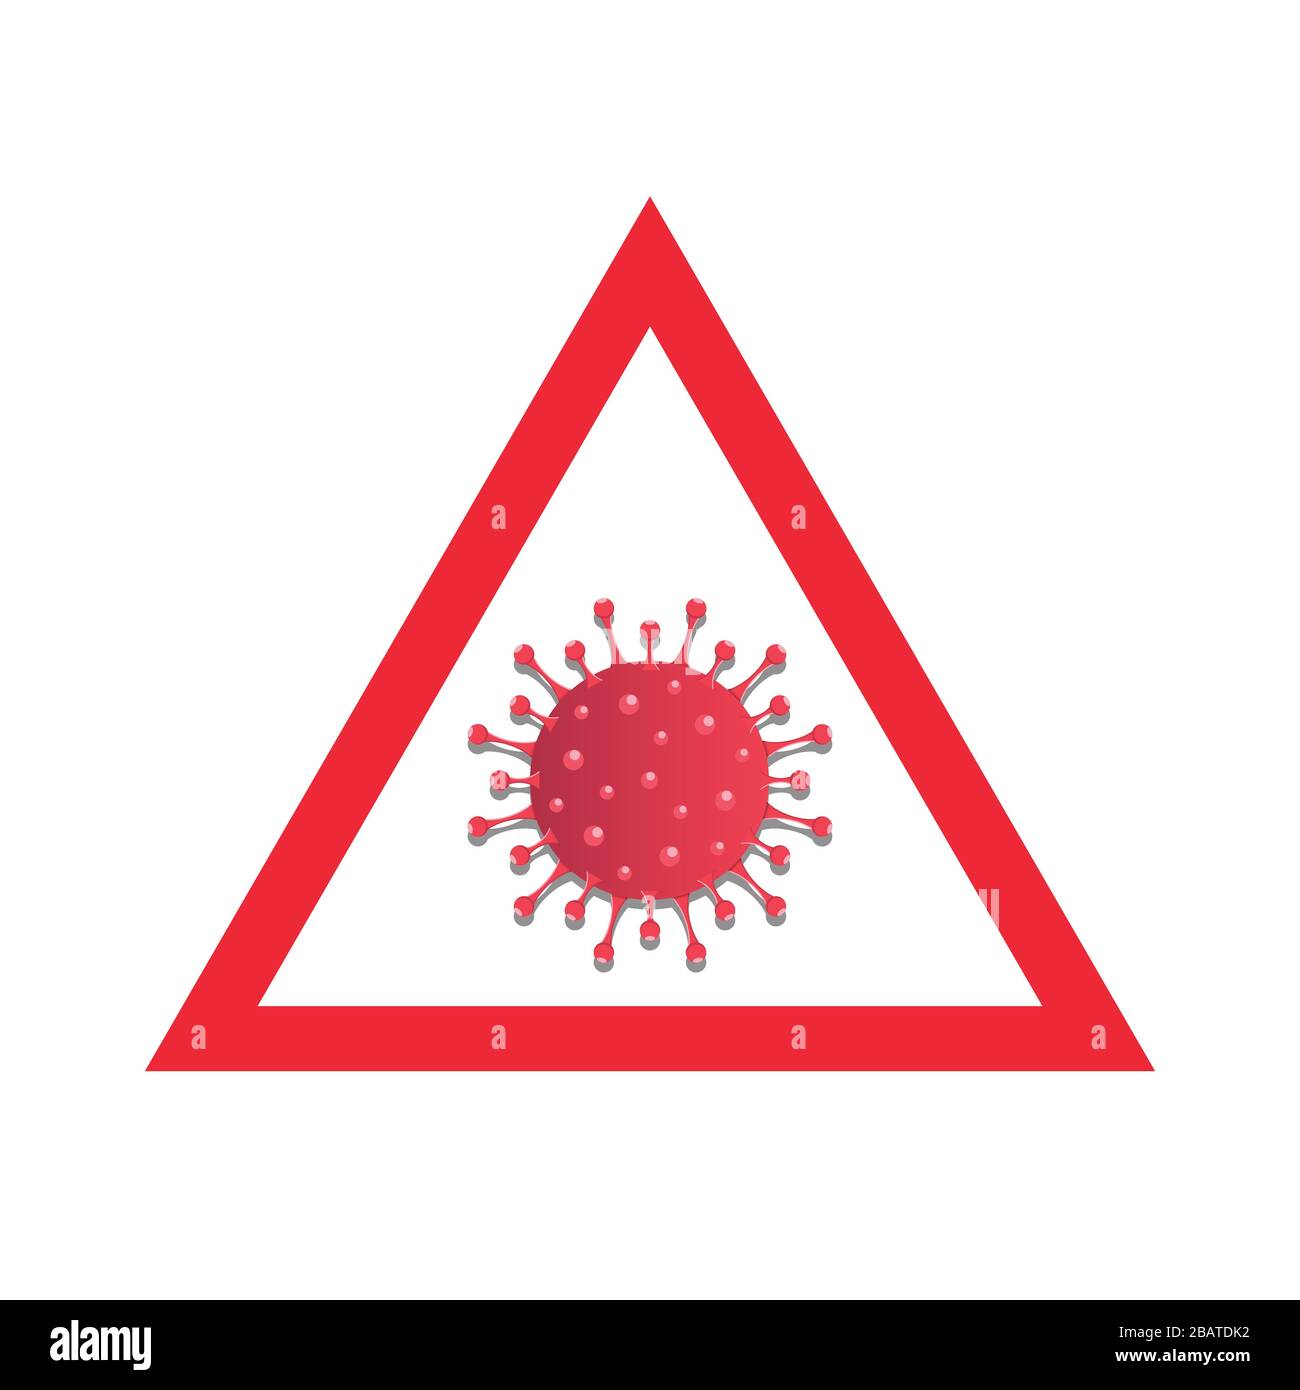 Virus - Coronavirus 2019-ncov, Disease germ, pathogen organism, infectious micro virology Stock Vector